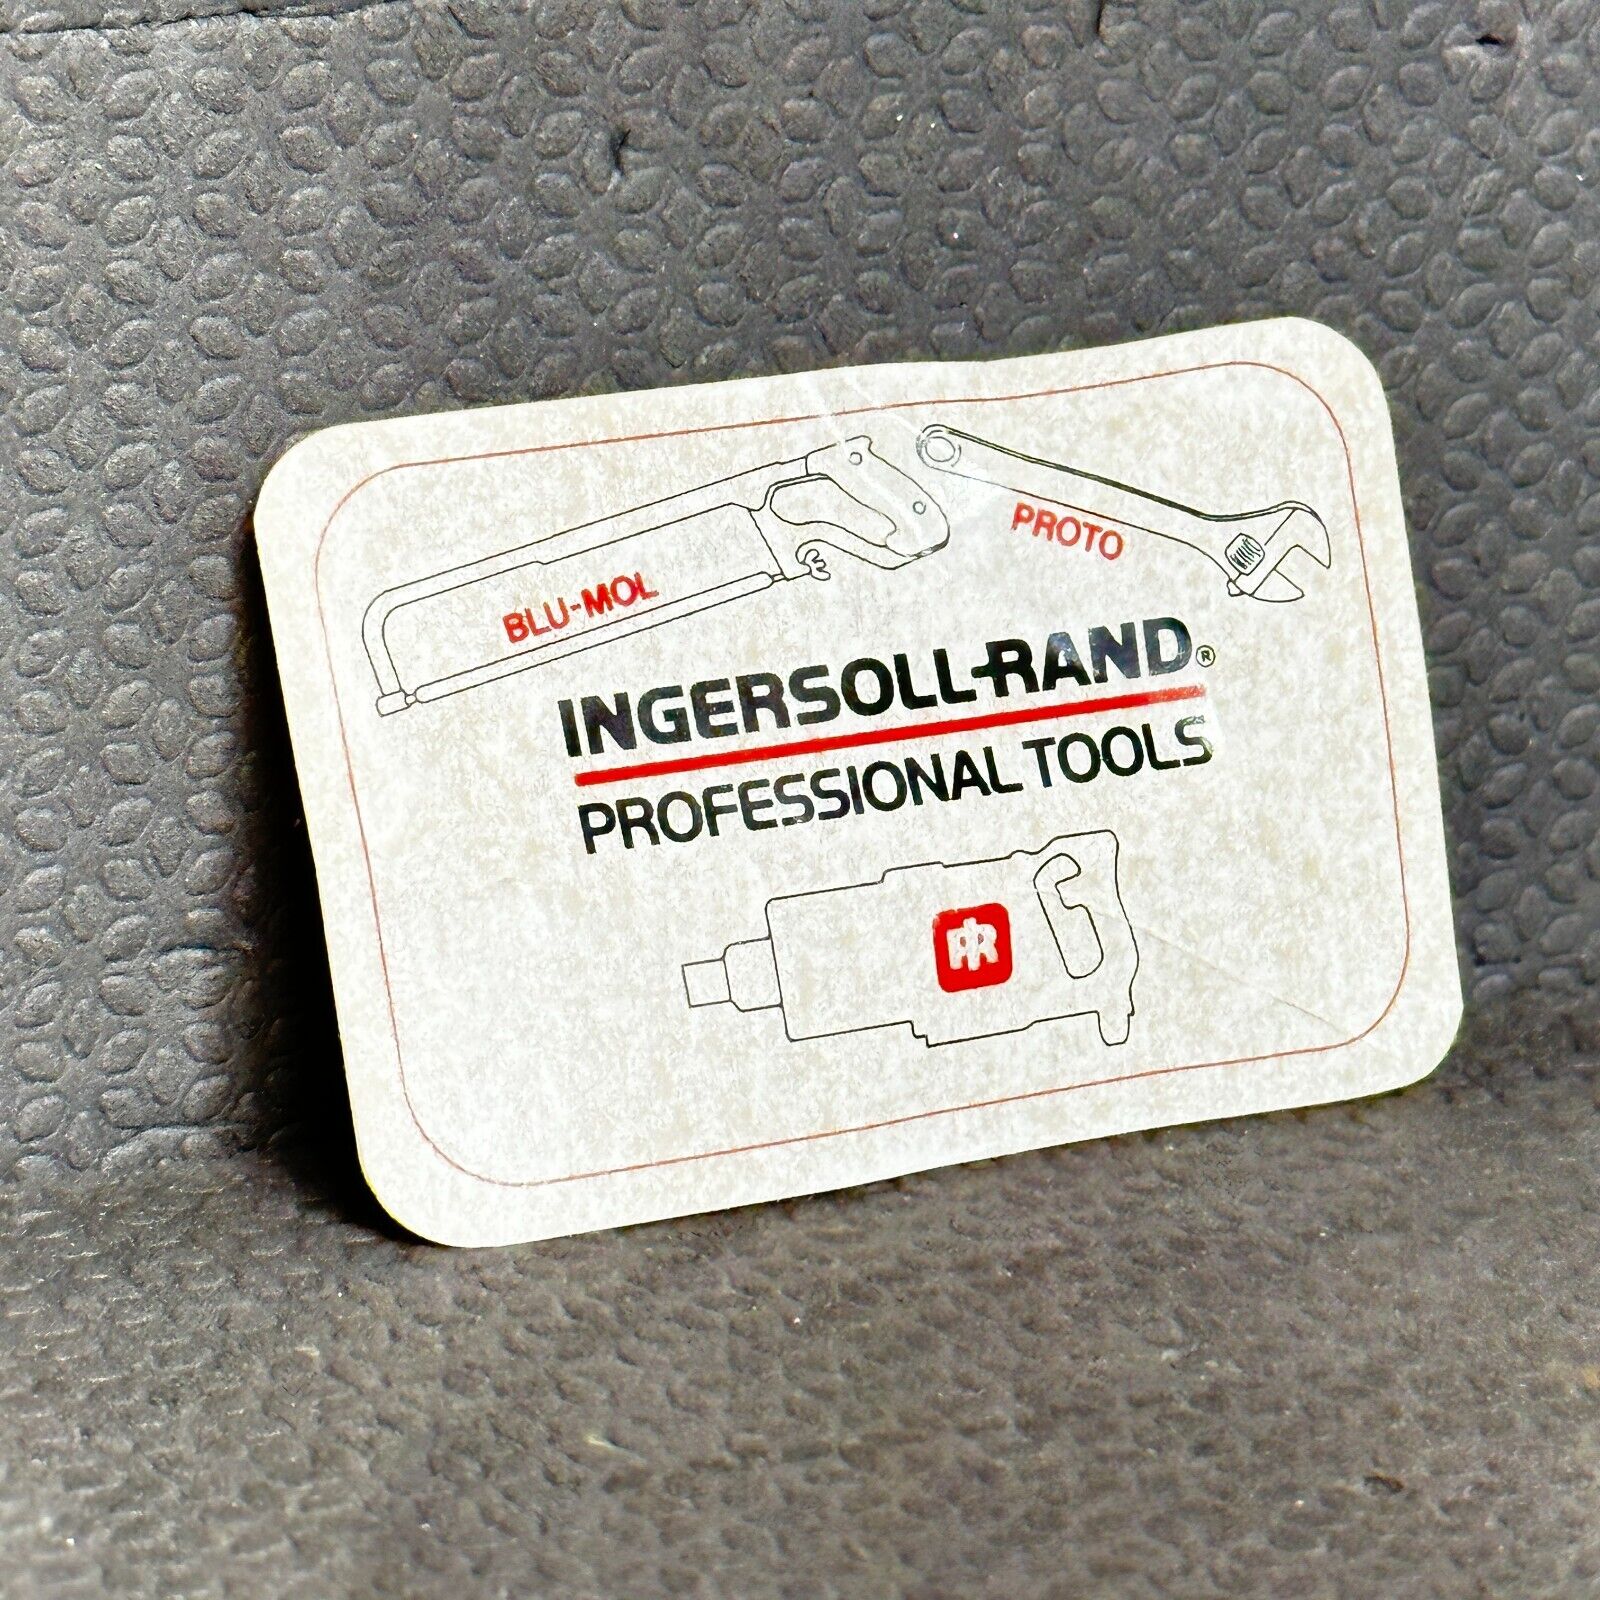 Vintage Ingersoll Rand Professional Tools Decal Sticker BLU_MOL PROTO White